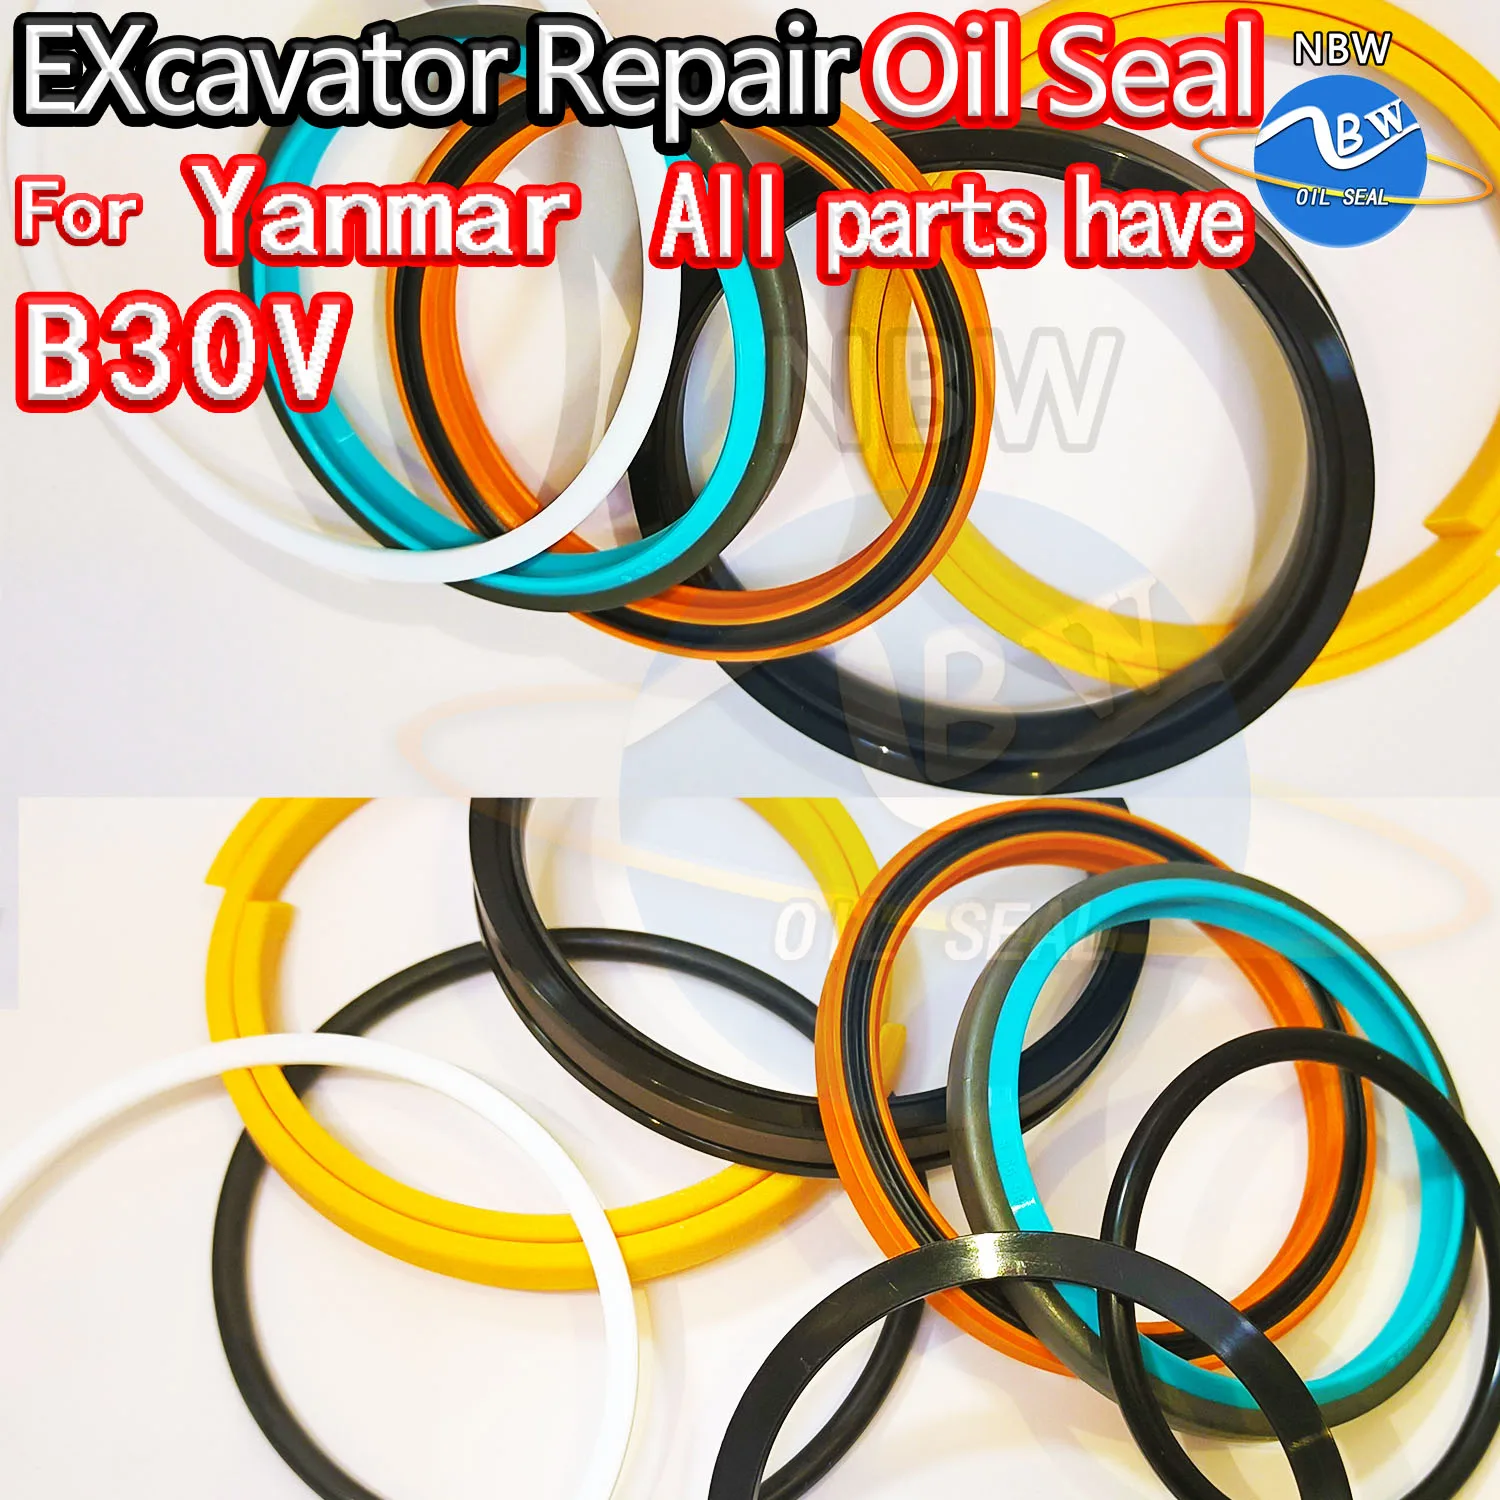 

For Yanmar B30V Excavator Oil Seal Kit High Quality Repair Ya Machinery Maintenance Floating Rebuild Parts MOTOR Piston Rod Dust